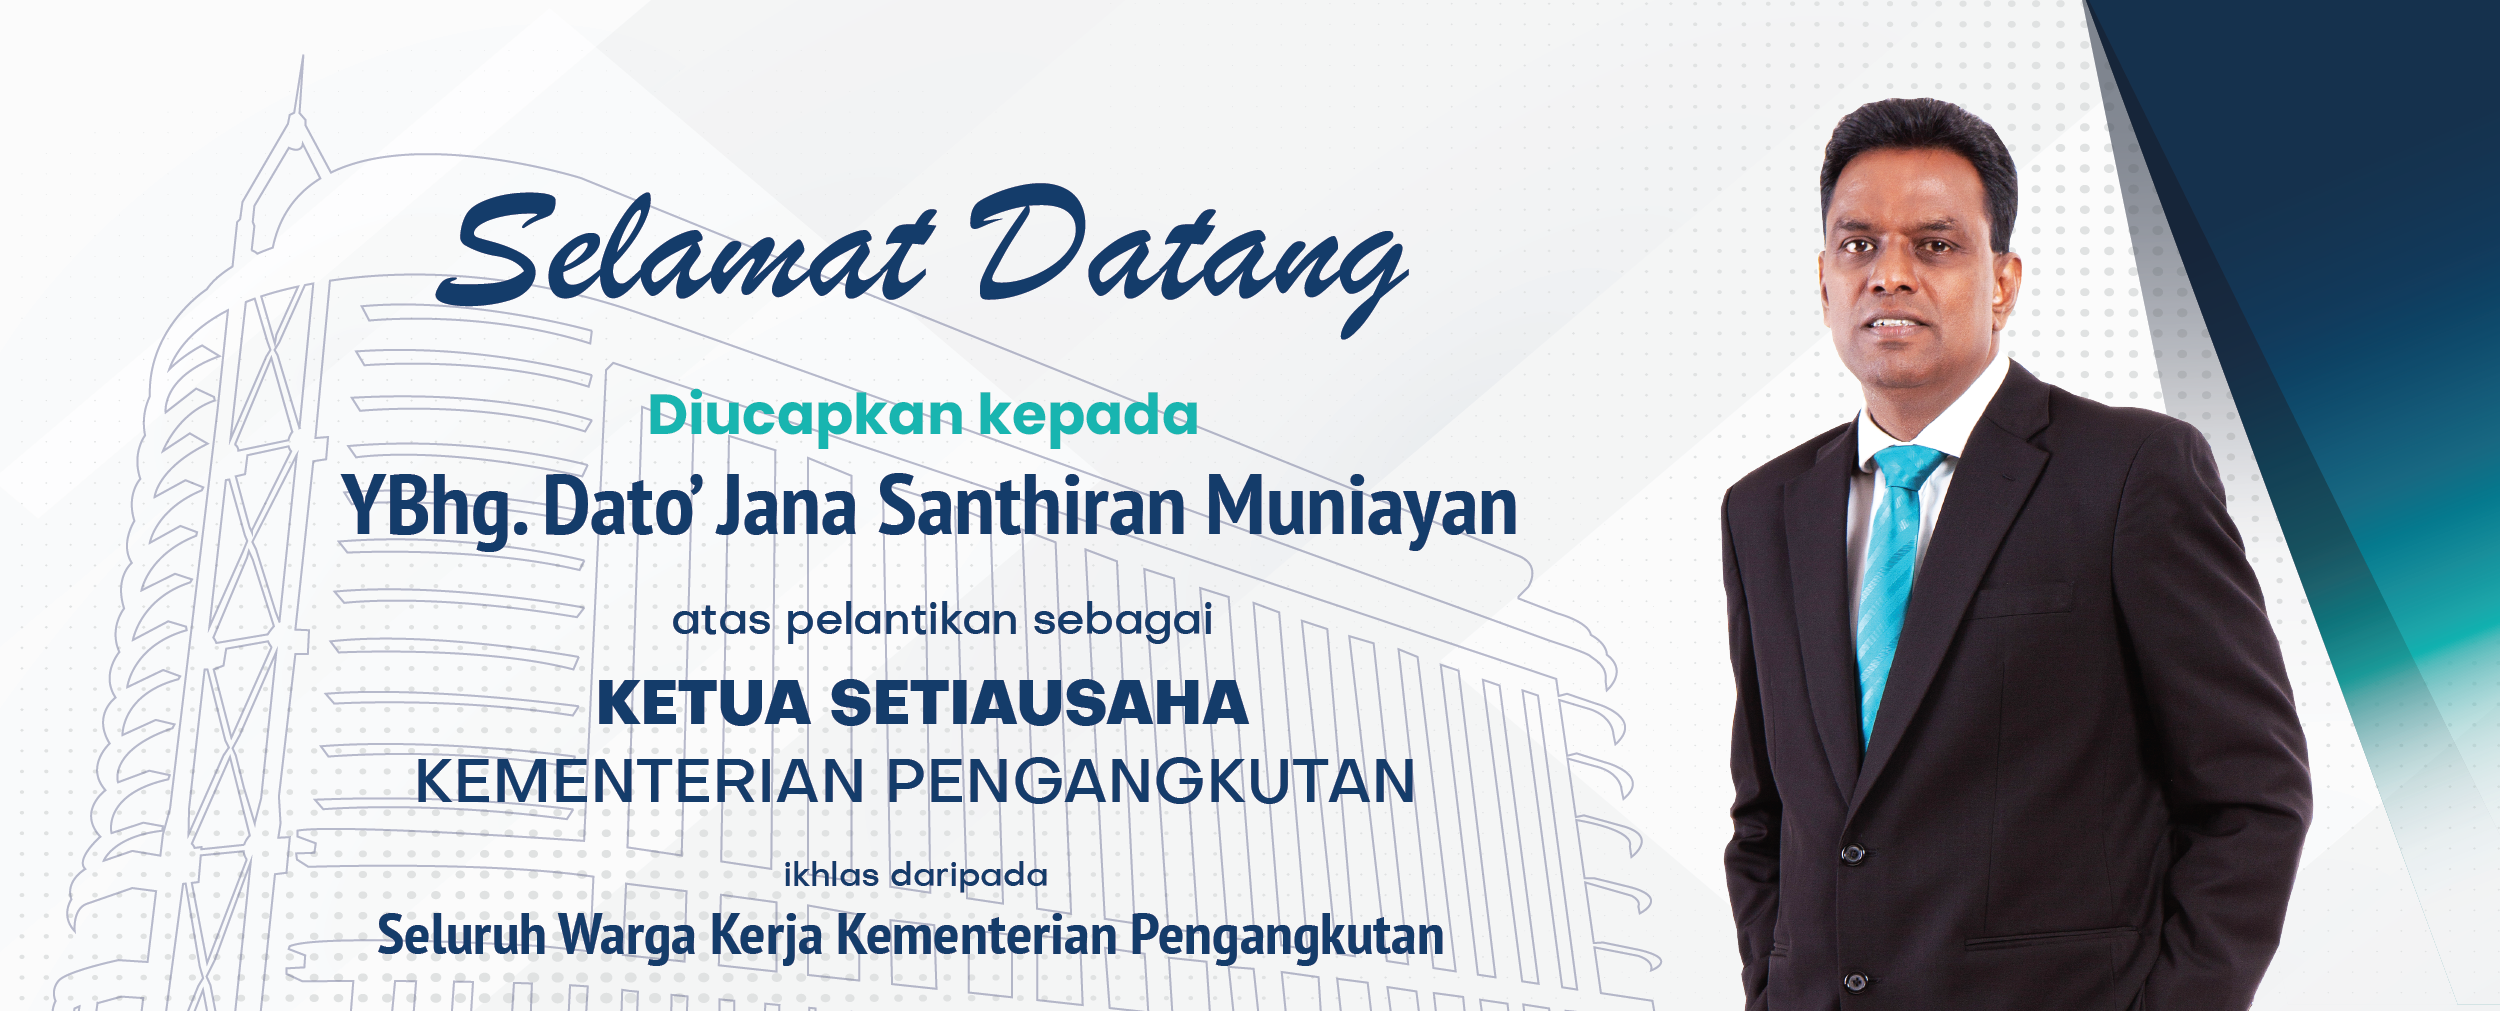 Welcome To Dato' Jana Santhiran Muniayan